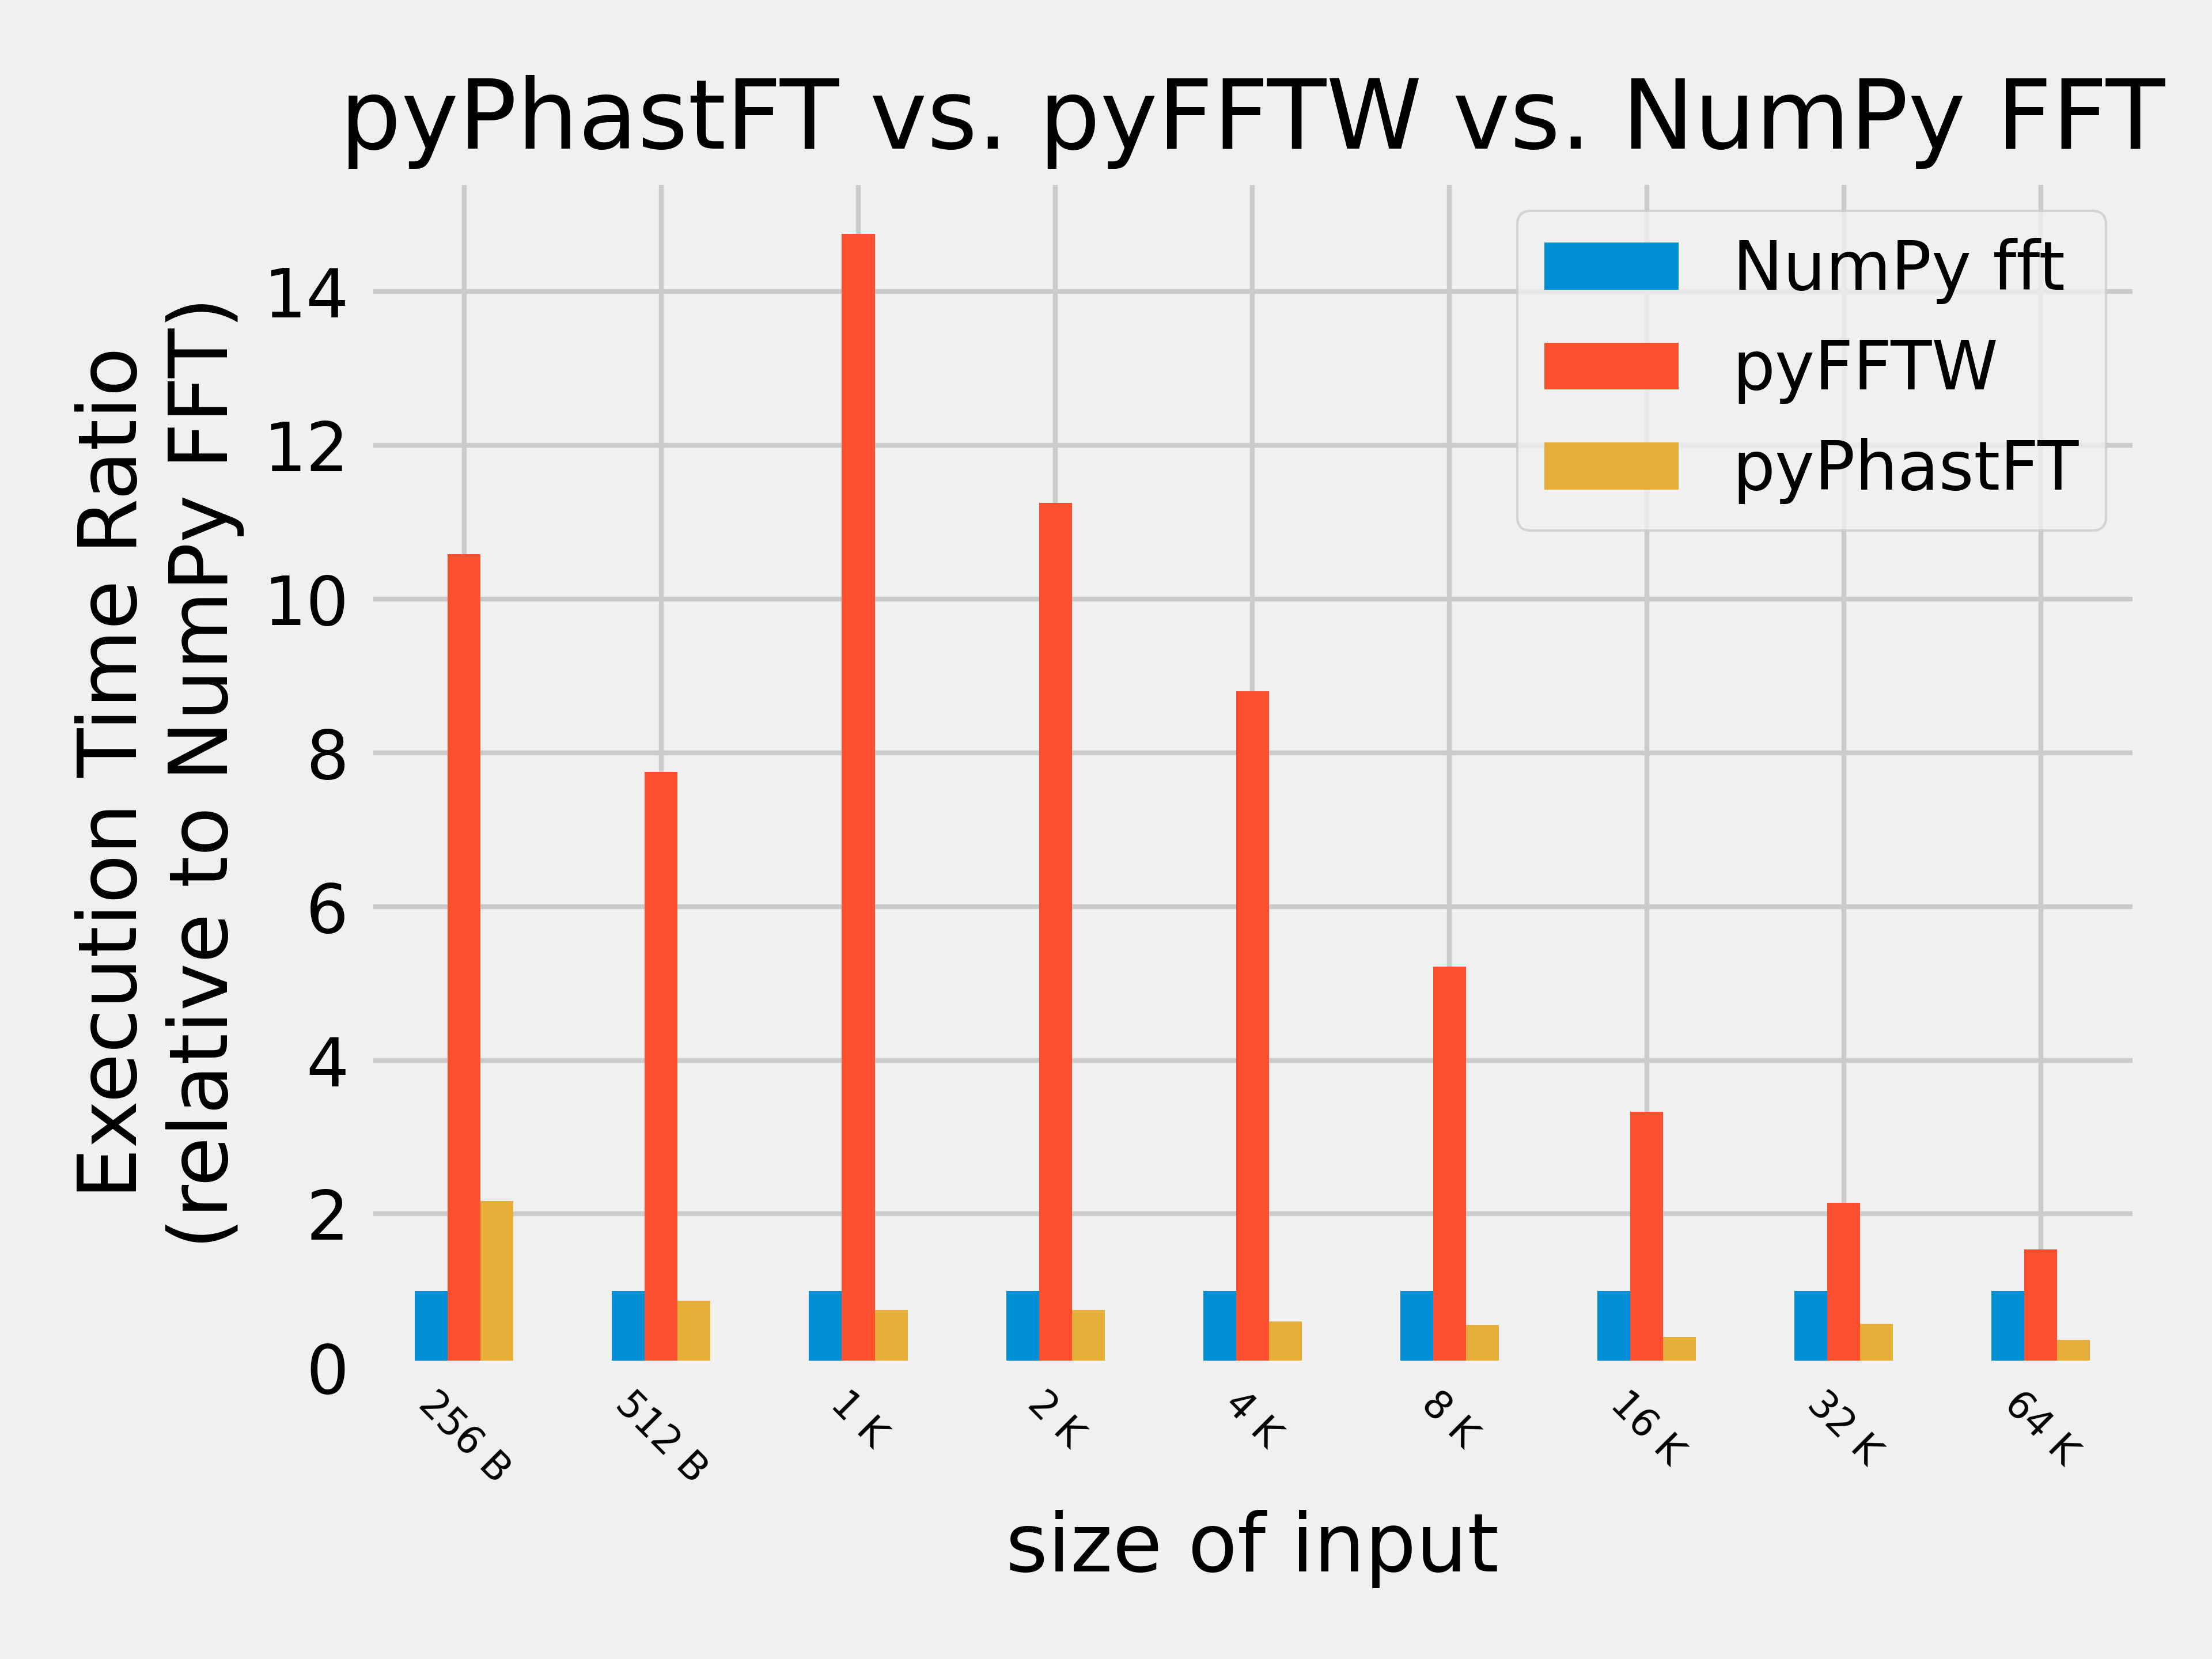 PhastFT vs. NumPy FFT vs. pyFFTW